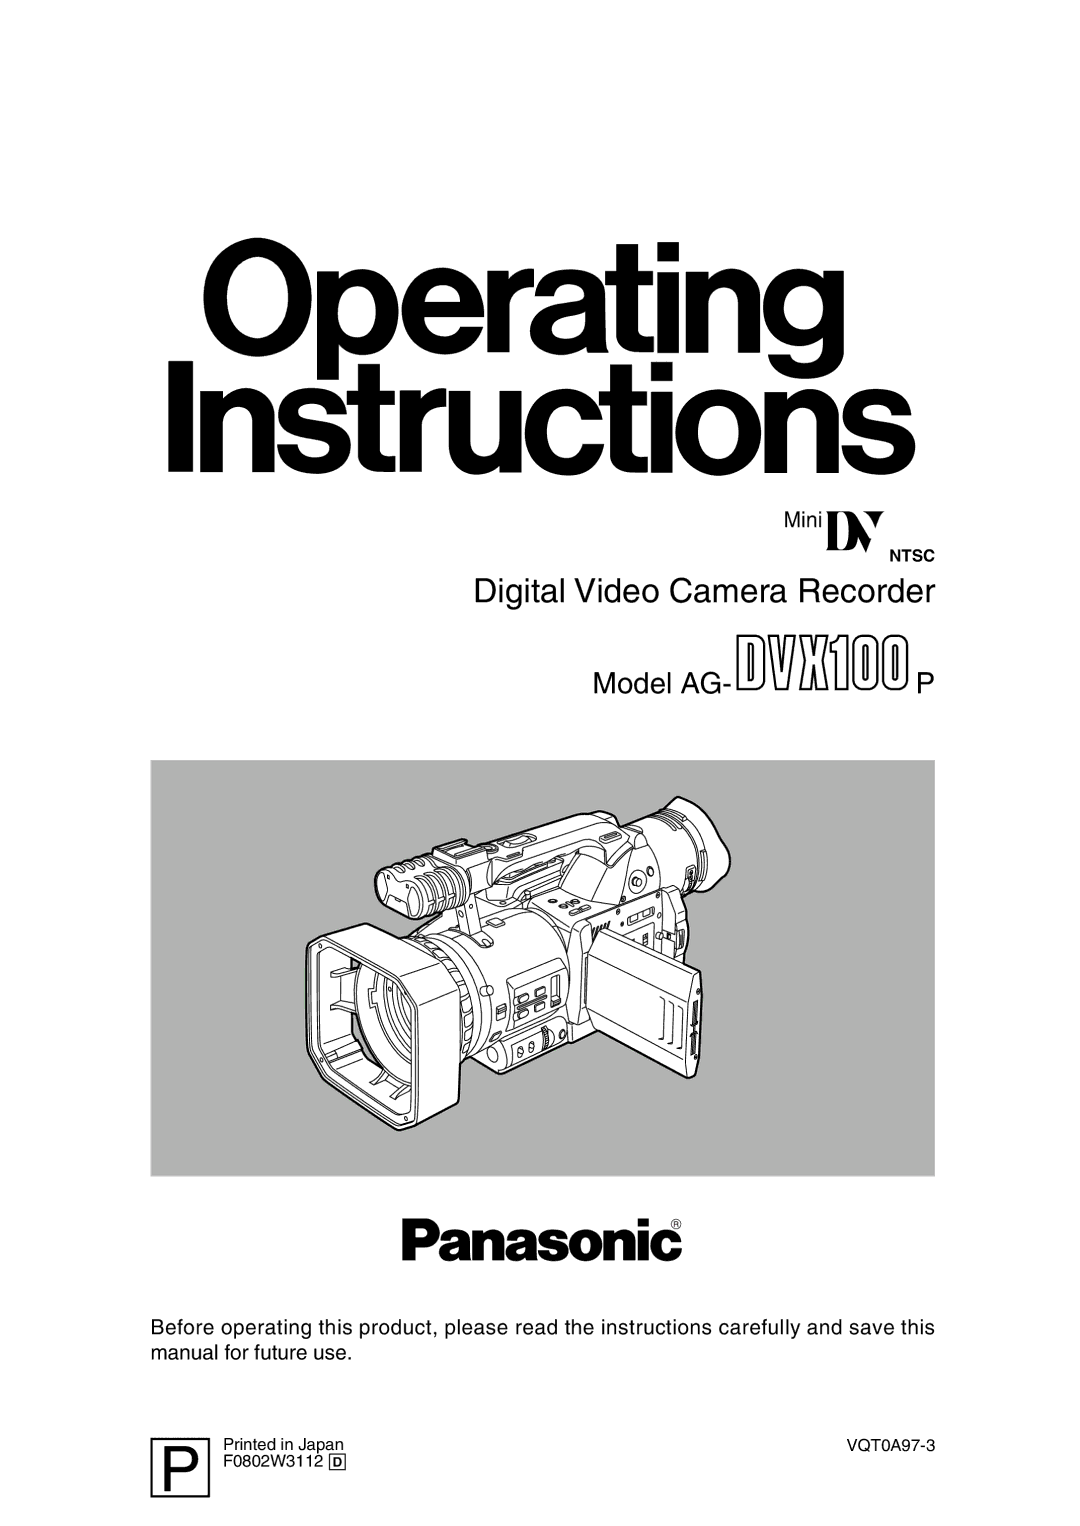 Panasonic AG-DVX100P manual Digital Video Camera Recorder 